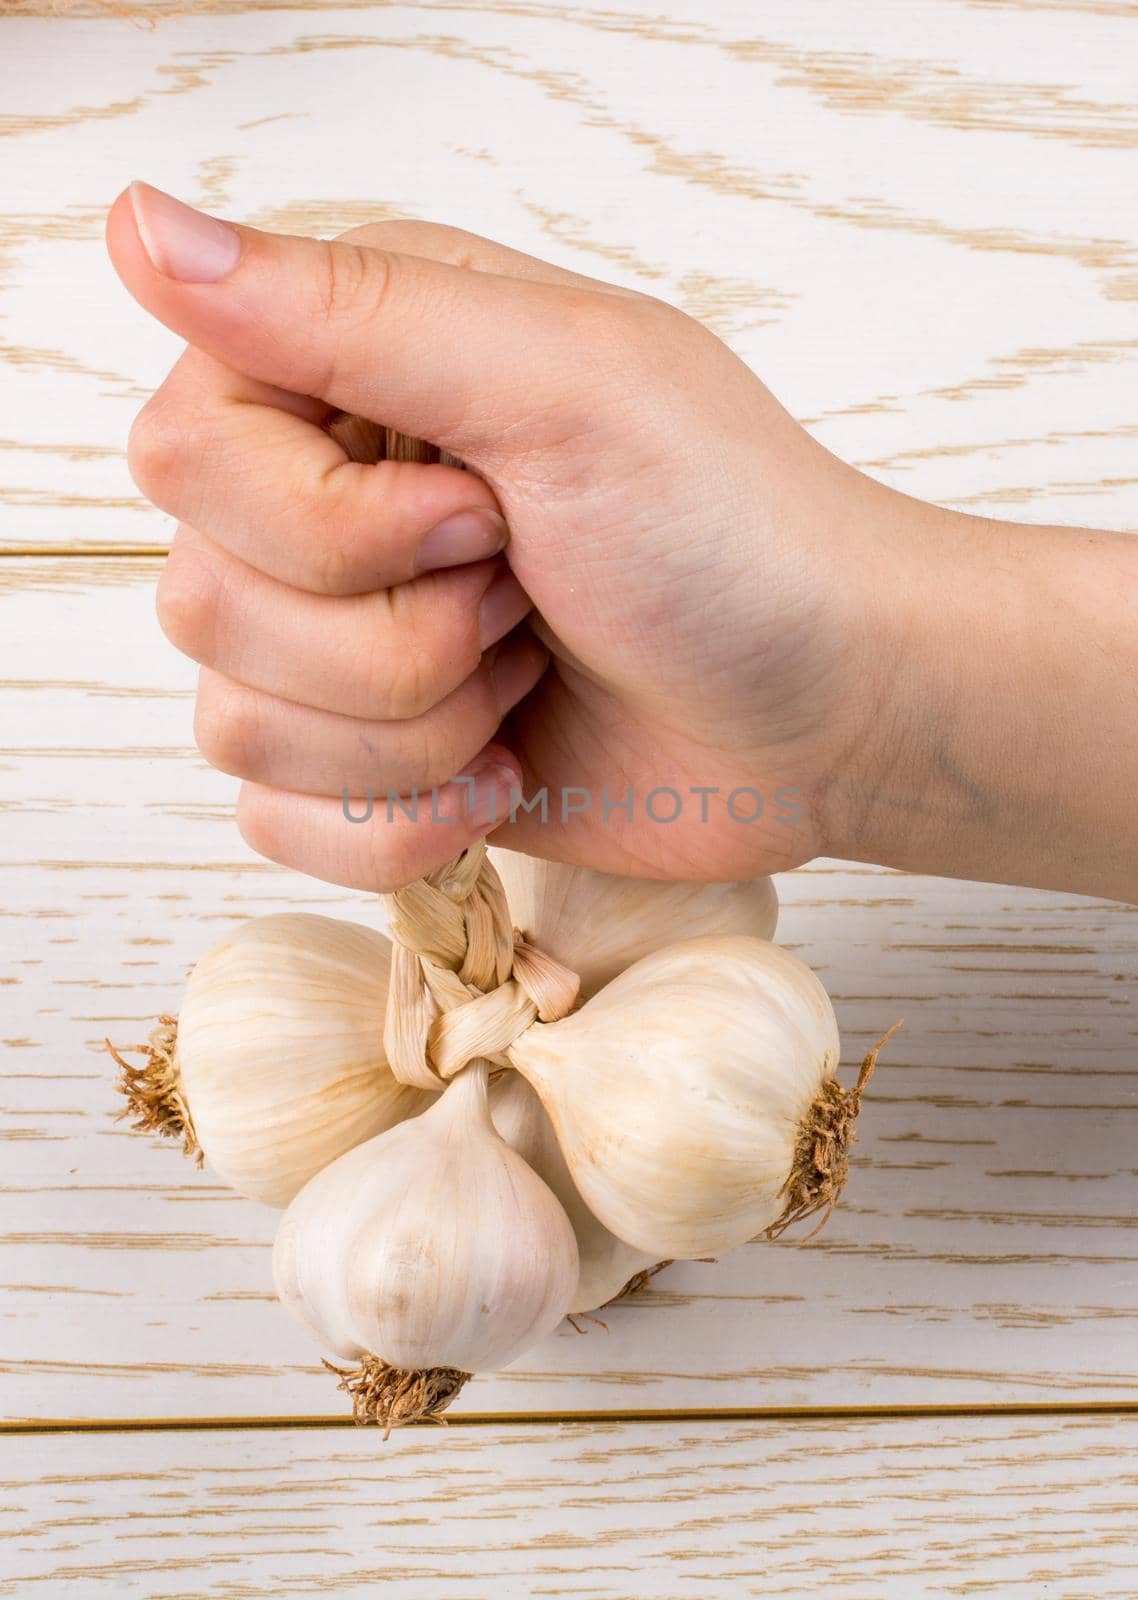 Cloves of garlic in hand  in view by berkay